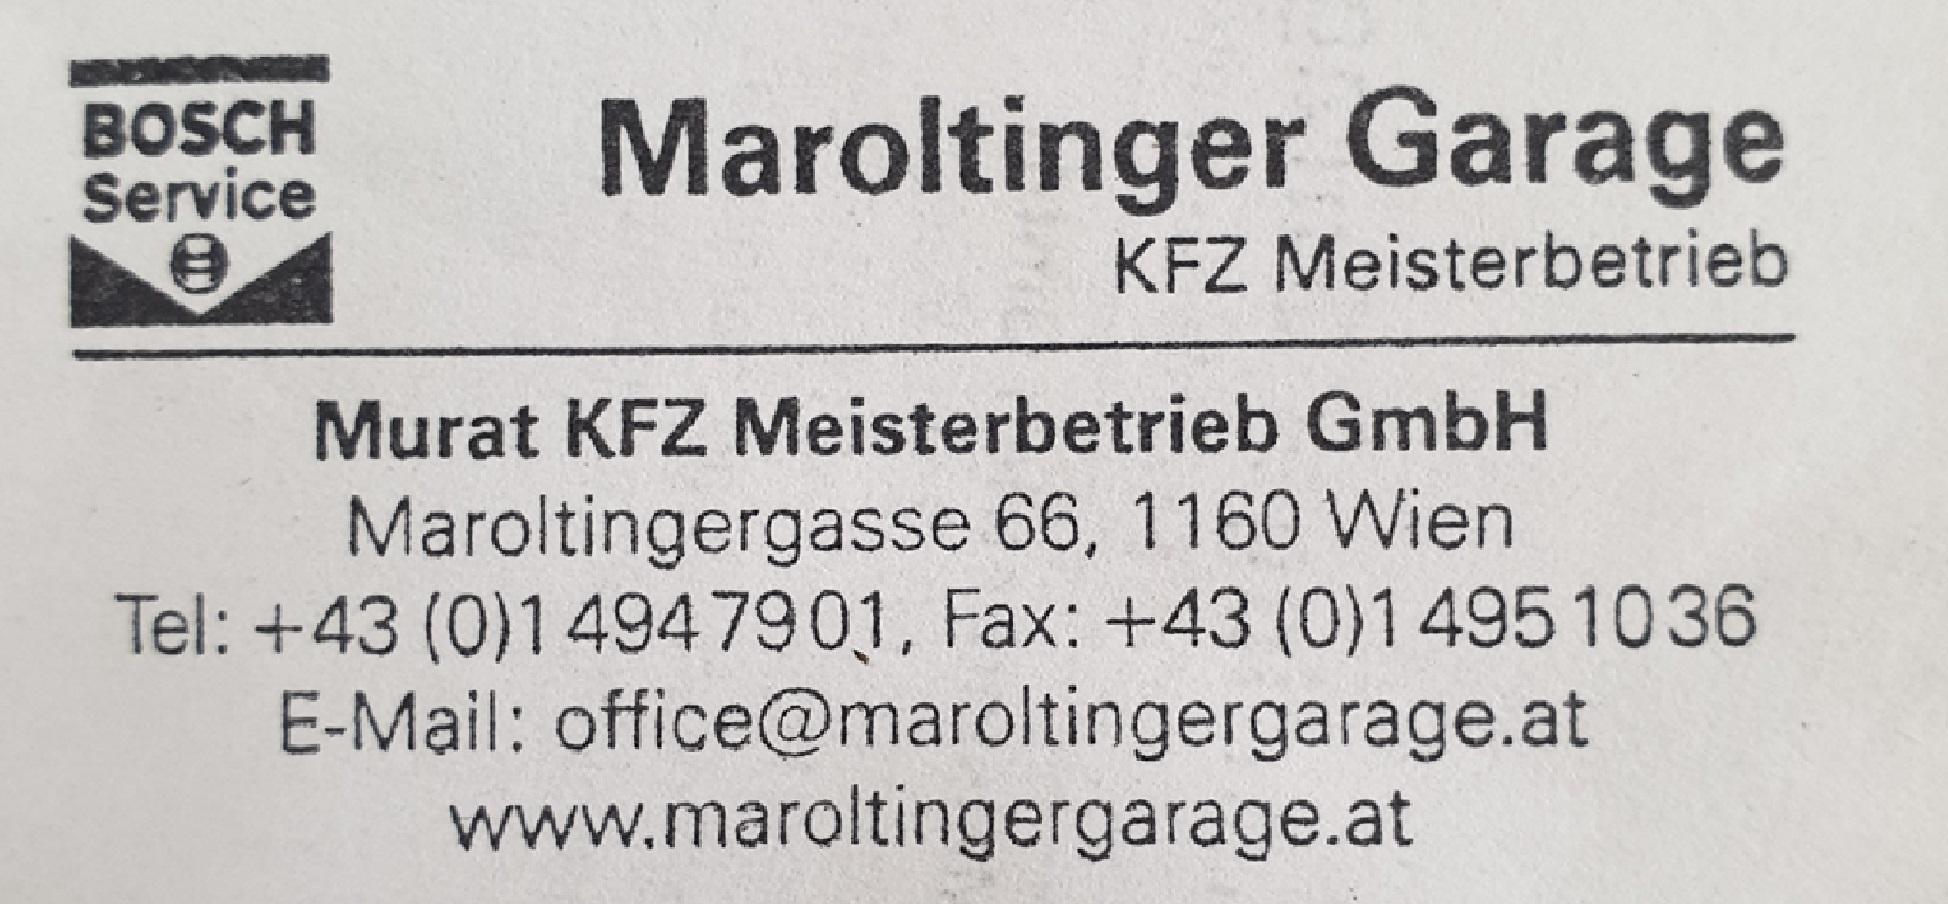 Maroltinger Garage KFZ Meisterbetrieb